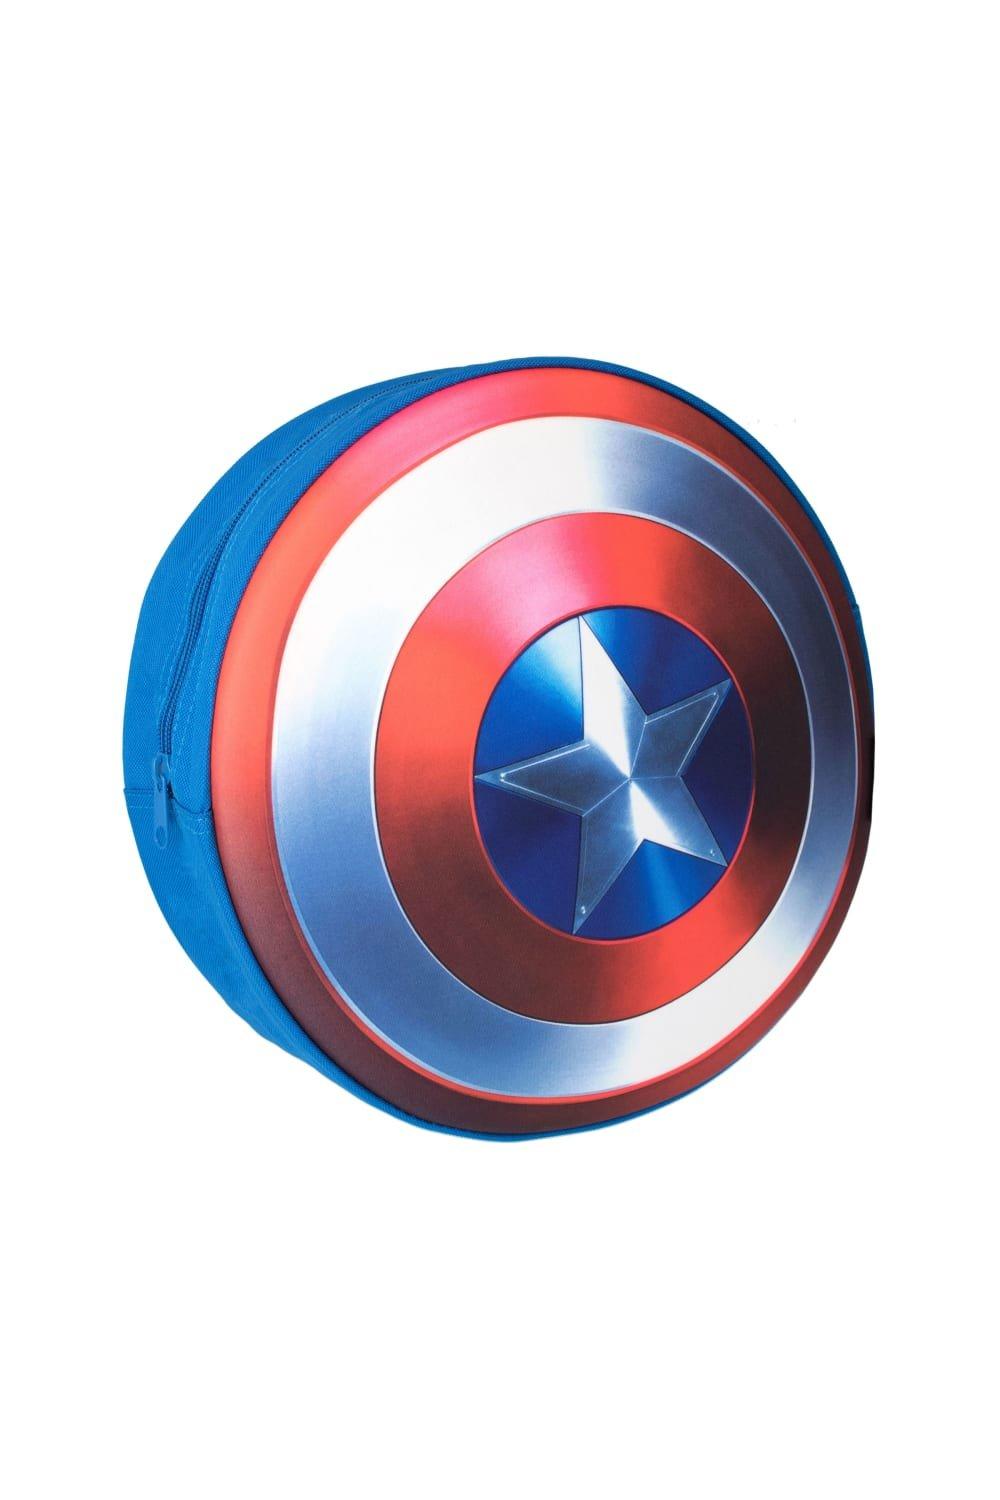 Детский рюкзак со щитом Капитана Америки Avengers, синий фигурка marvel s avengers ручной работы капитан америка